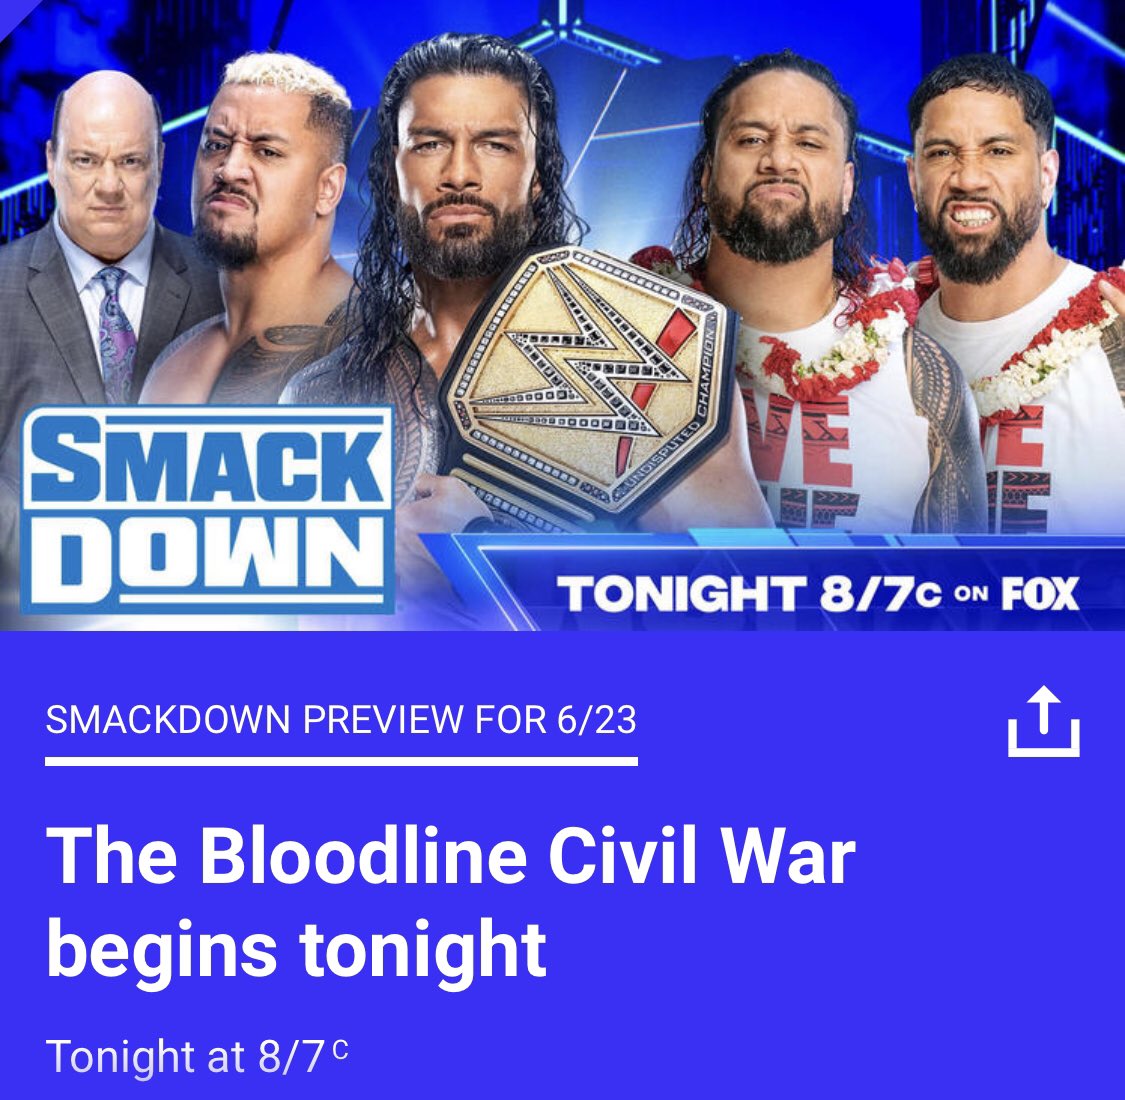 Roman Advertised for today Friday Night Smackdown. 
#WWE #Smackdown #RomanReigns #Bloodline #JeyUso #JimmyUso #SoloSikoa #PaulHeyman